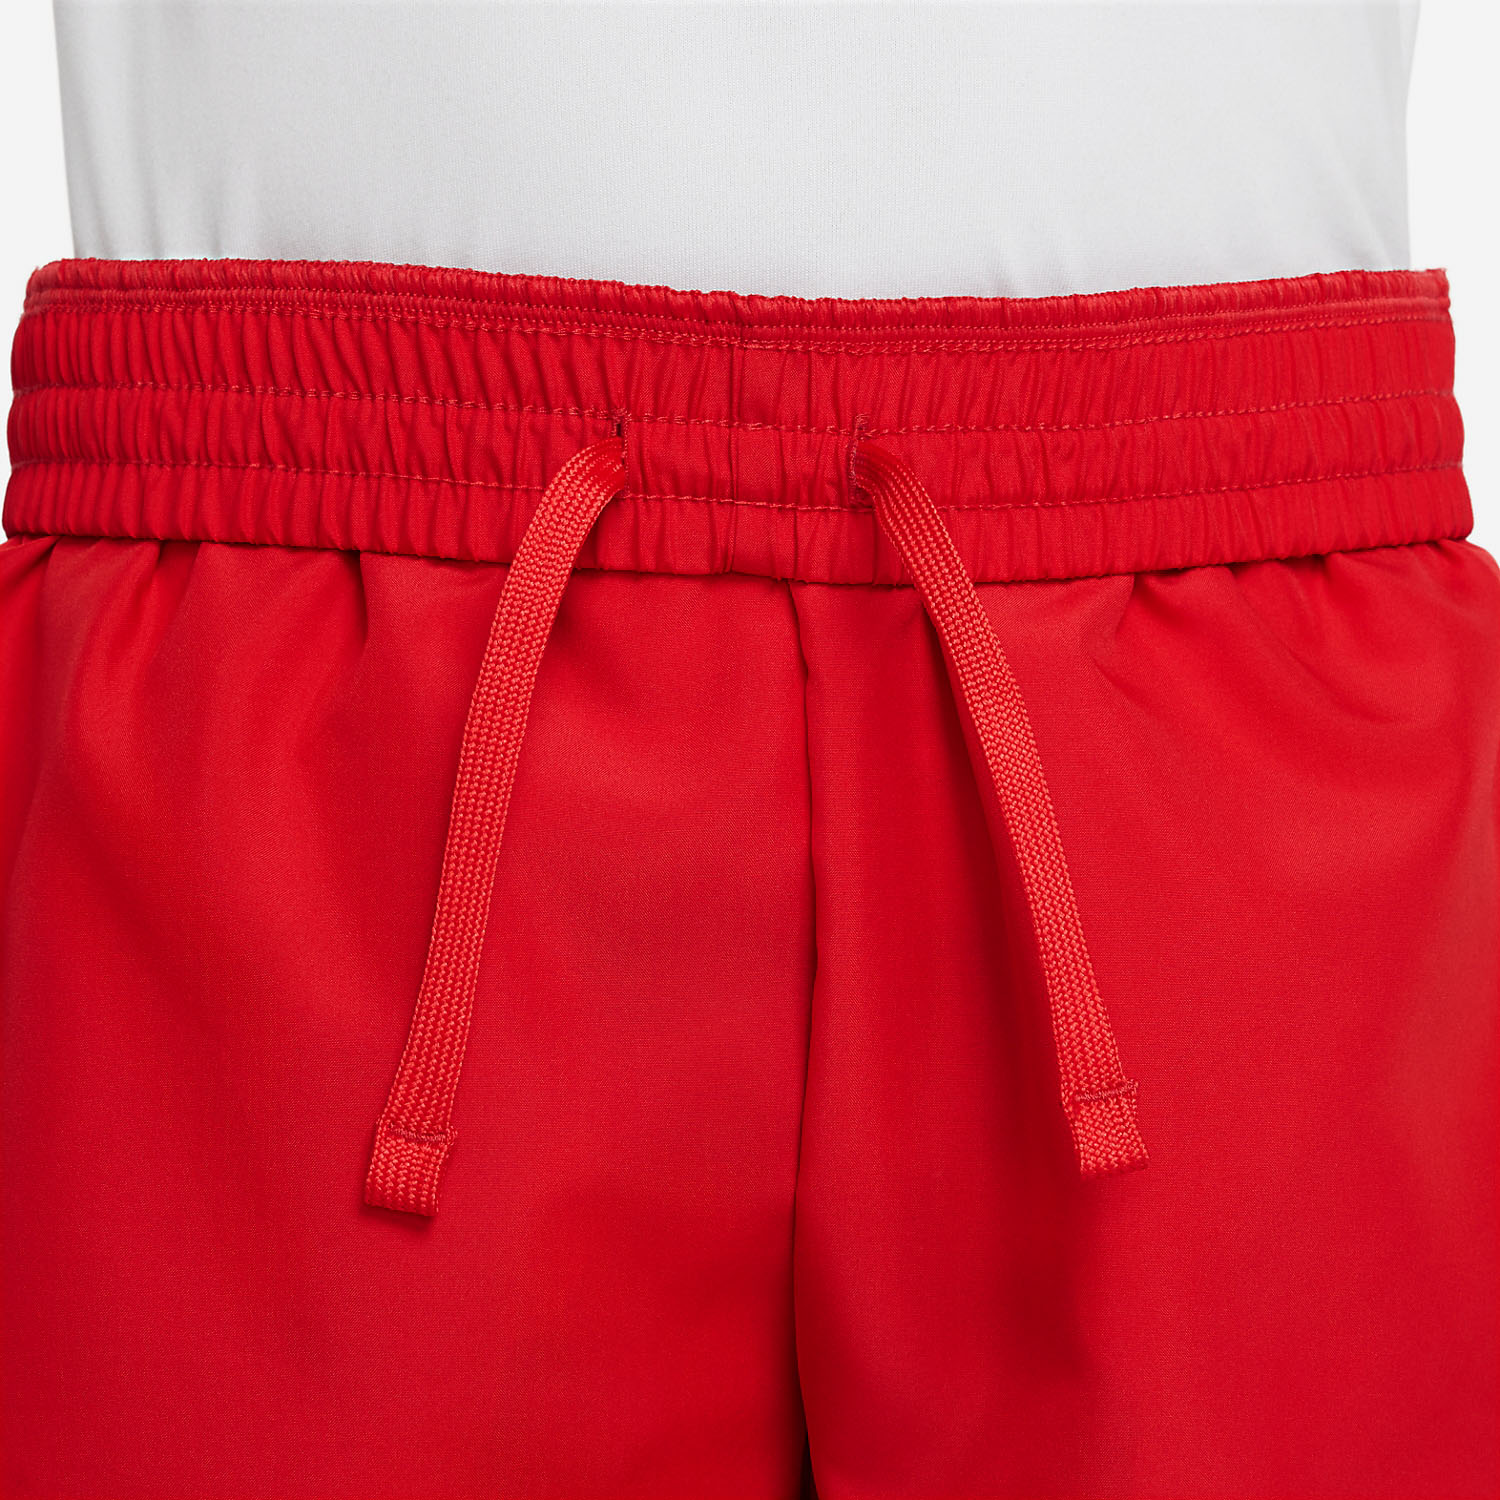 Nike Dri-FIT Icon 6in Shorts Boy - University Red/White